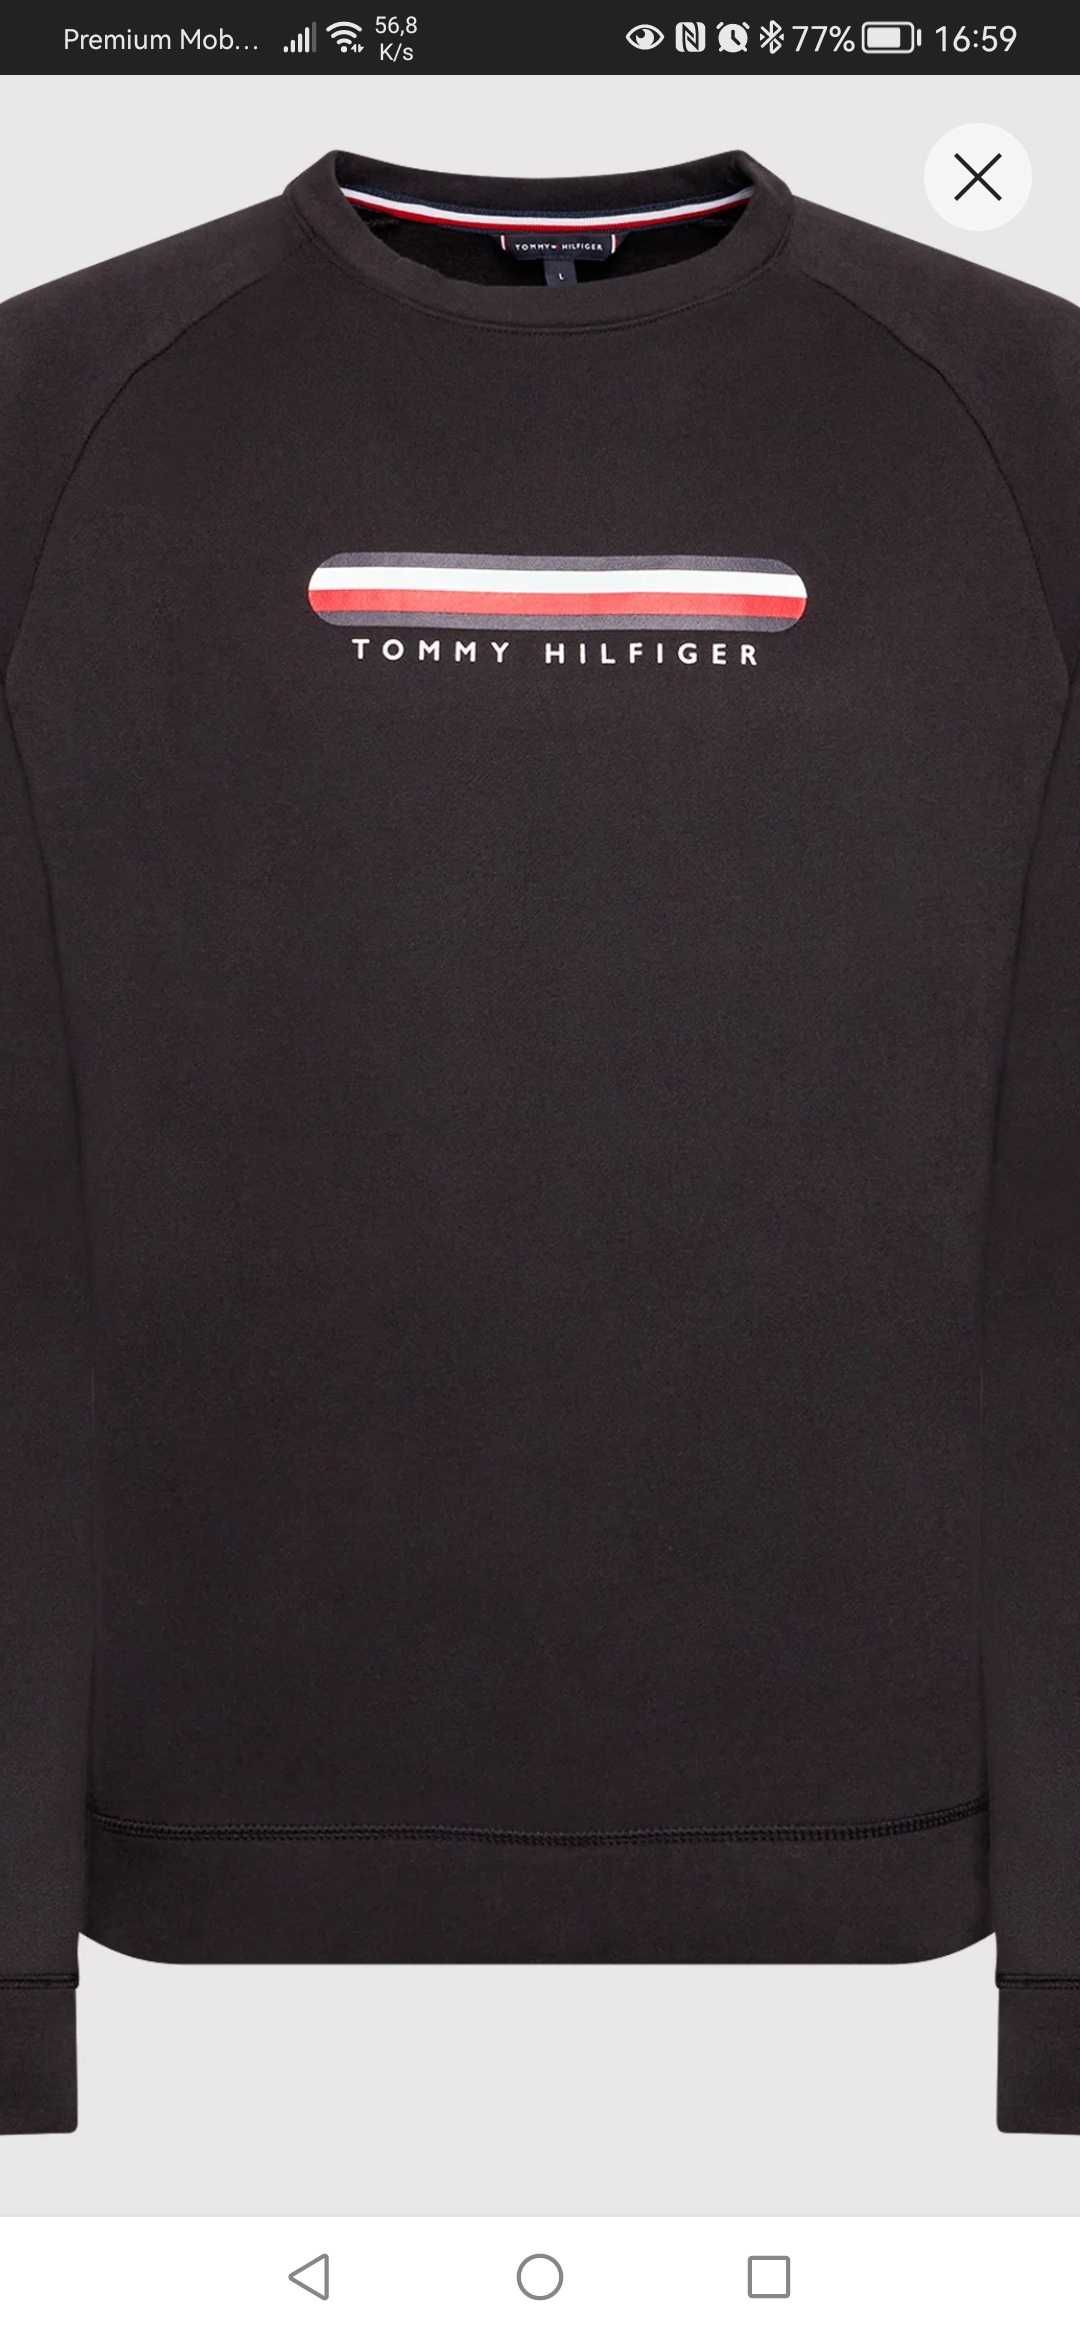 Bluza Męska Tommy Hilfiger XL / L. Bluza Track Top UM0UM02363 Czarny